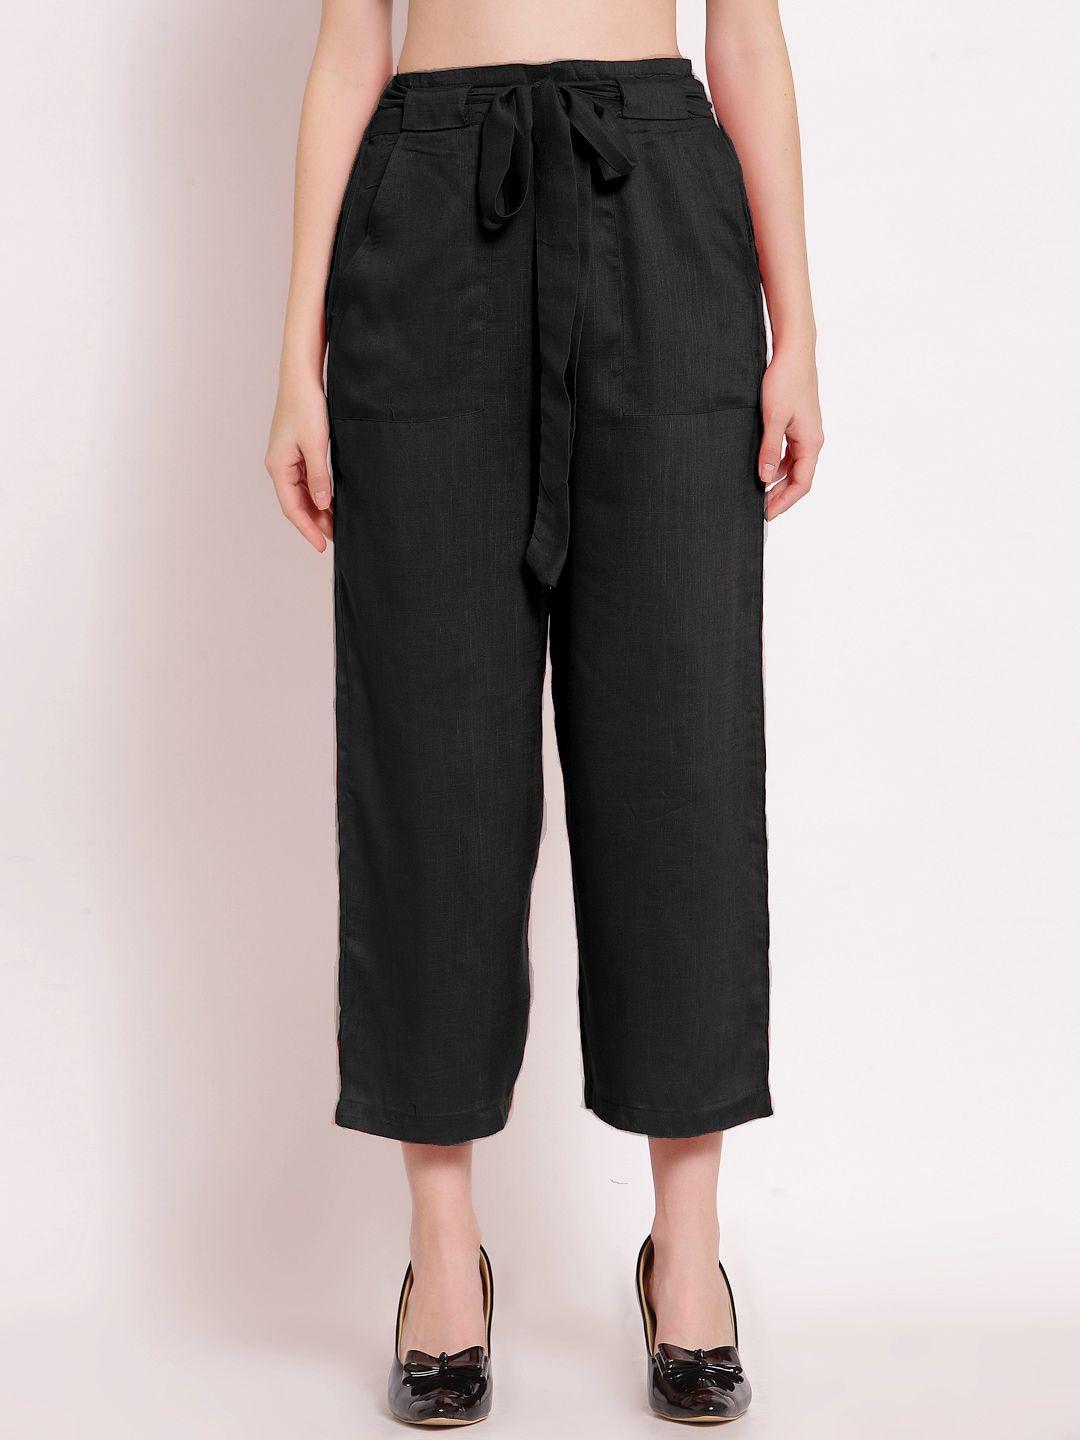 patrorna-women-smart-culottes-trousers